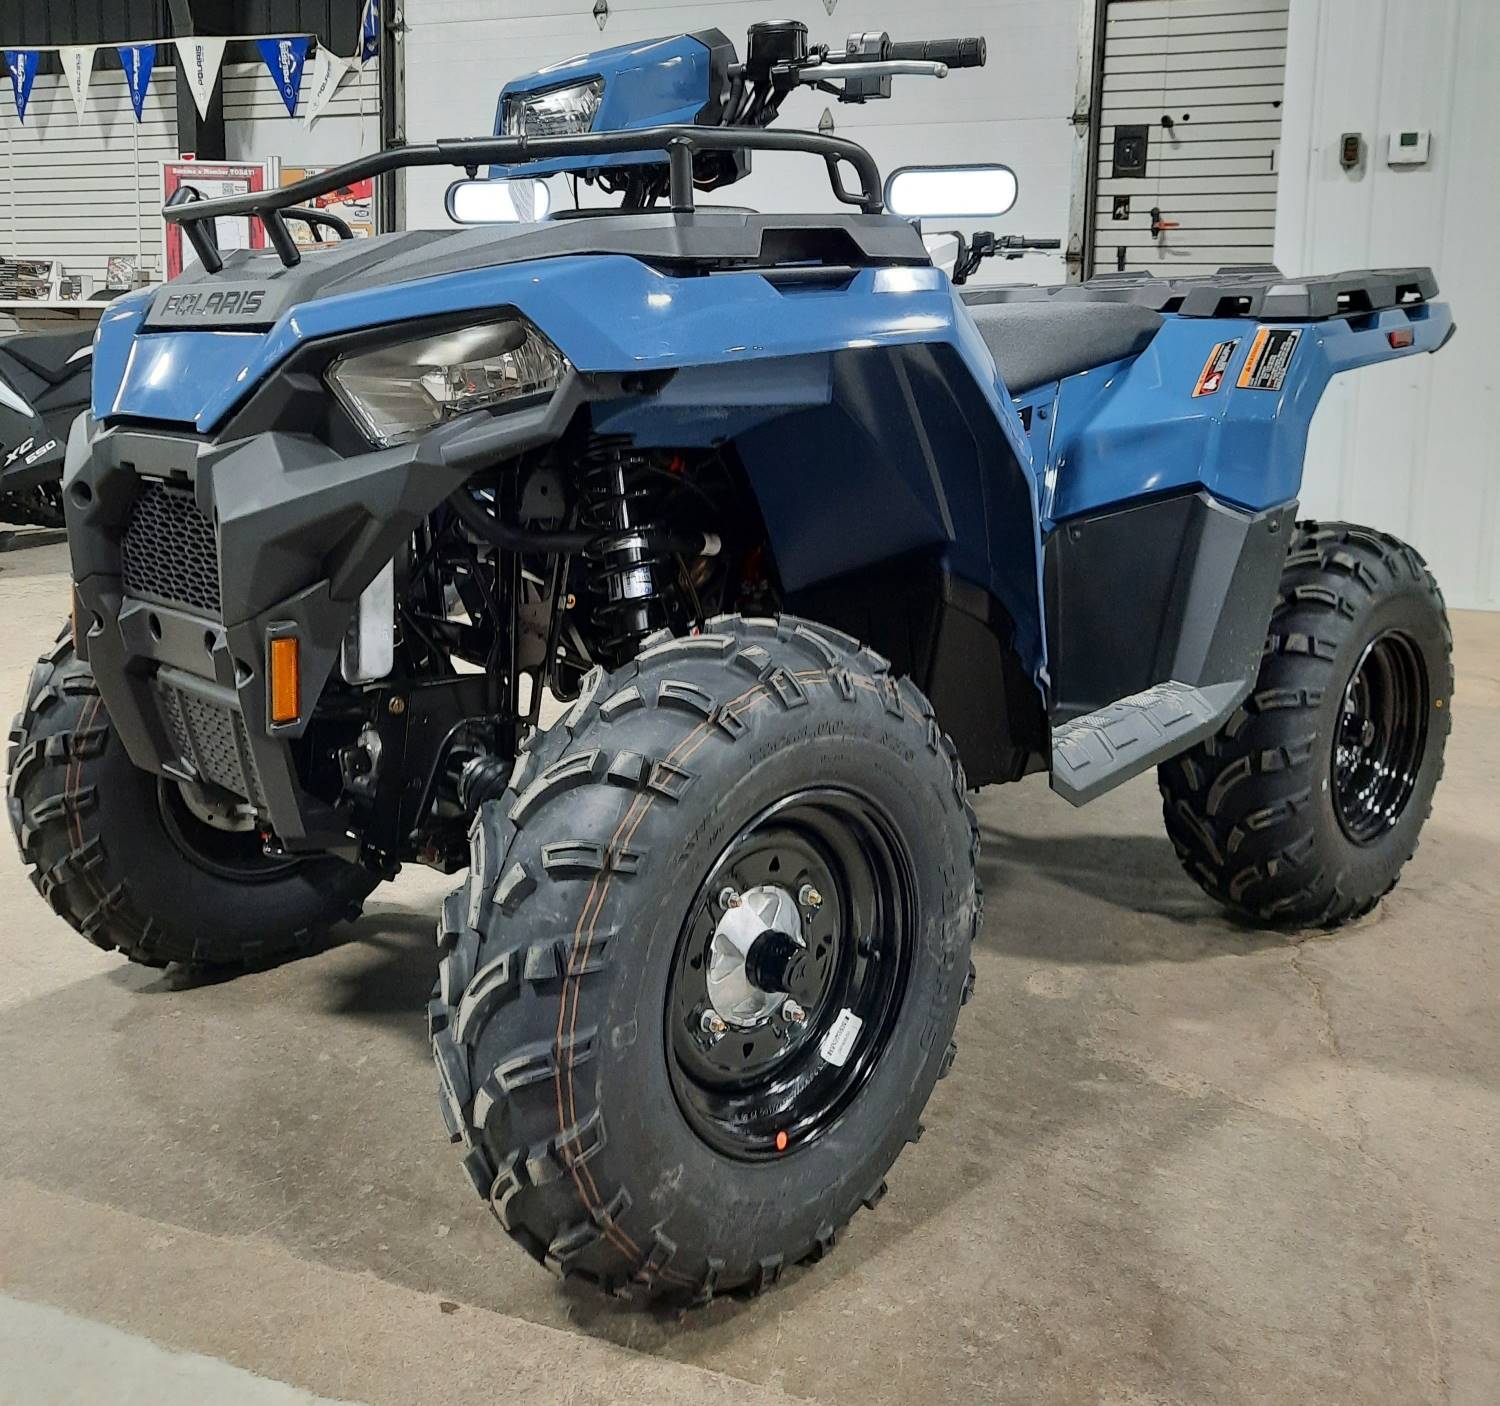 New 2021 Polaris Sportsman 450 H.O. ATVs in Devils Lake ND